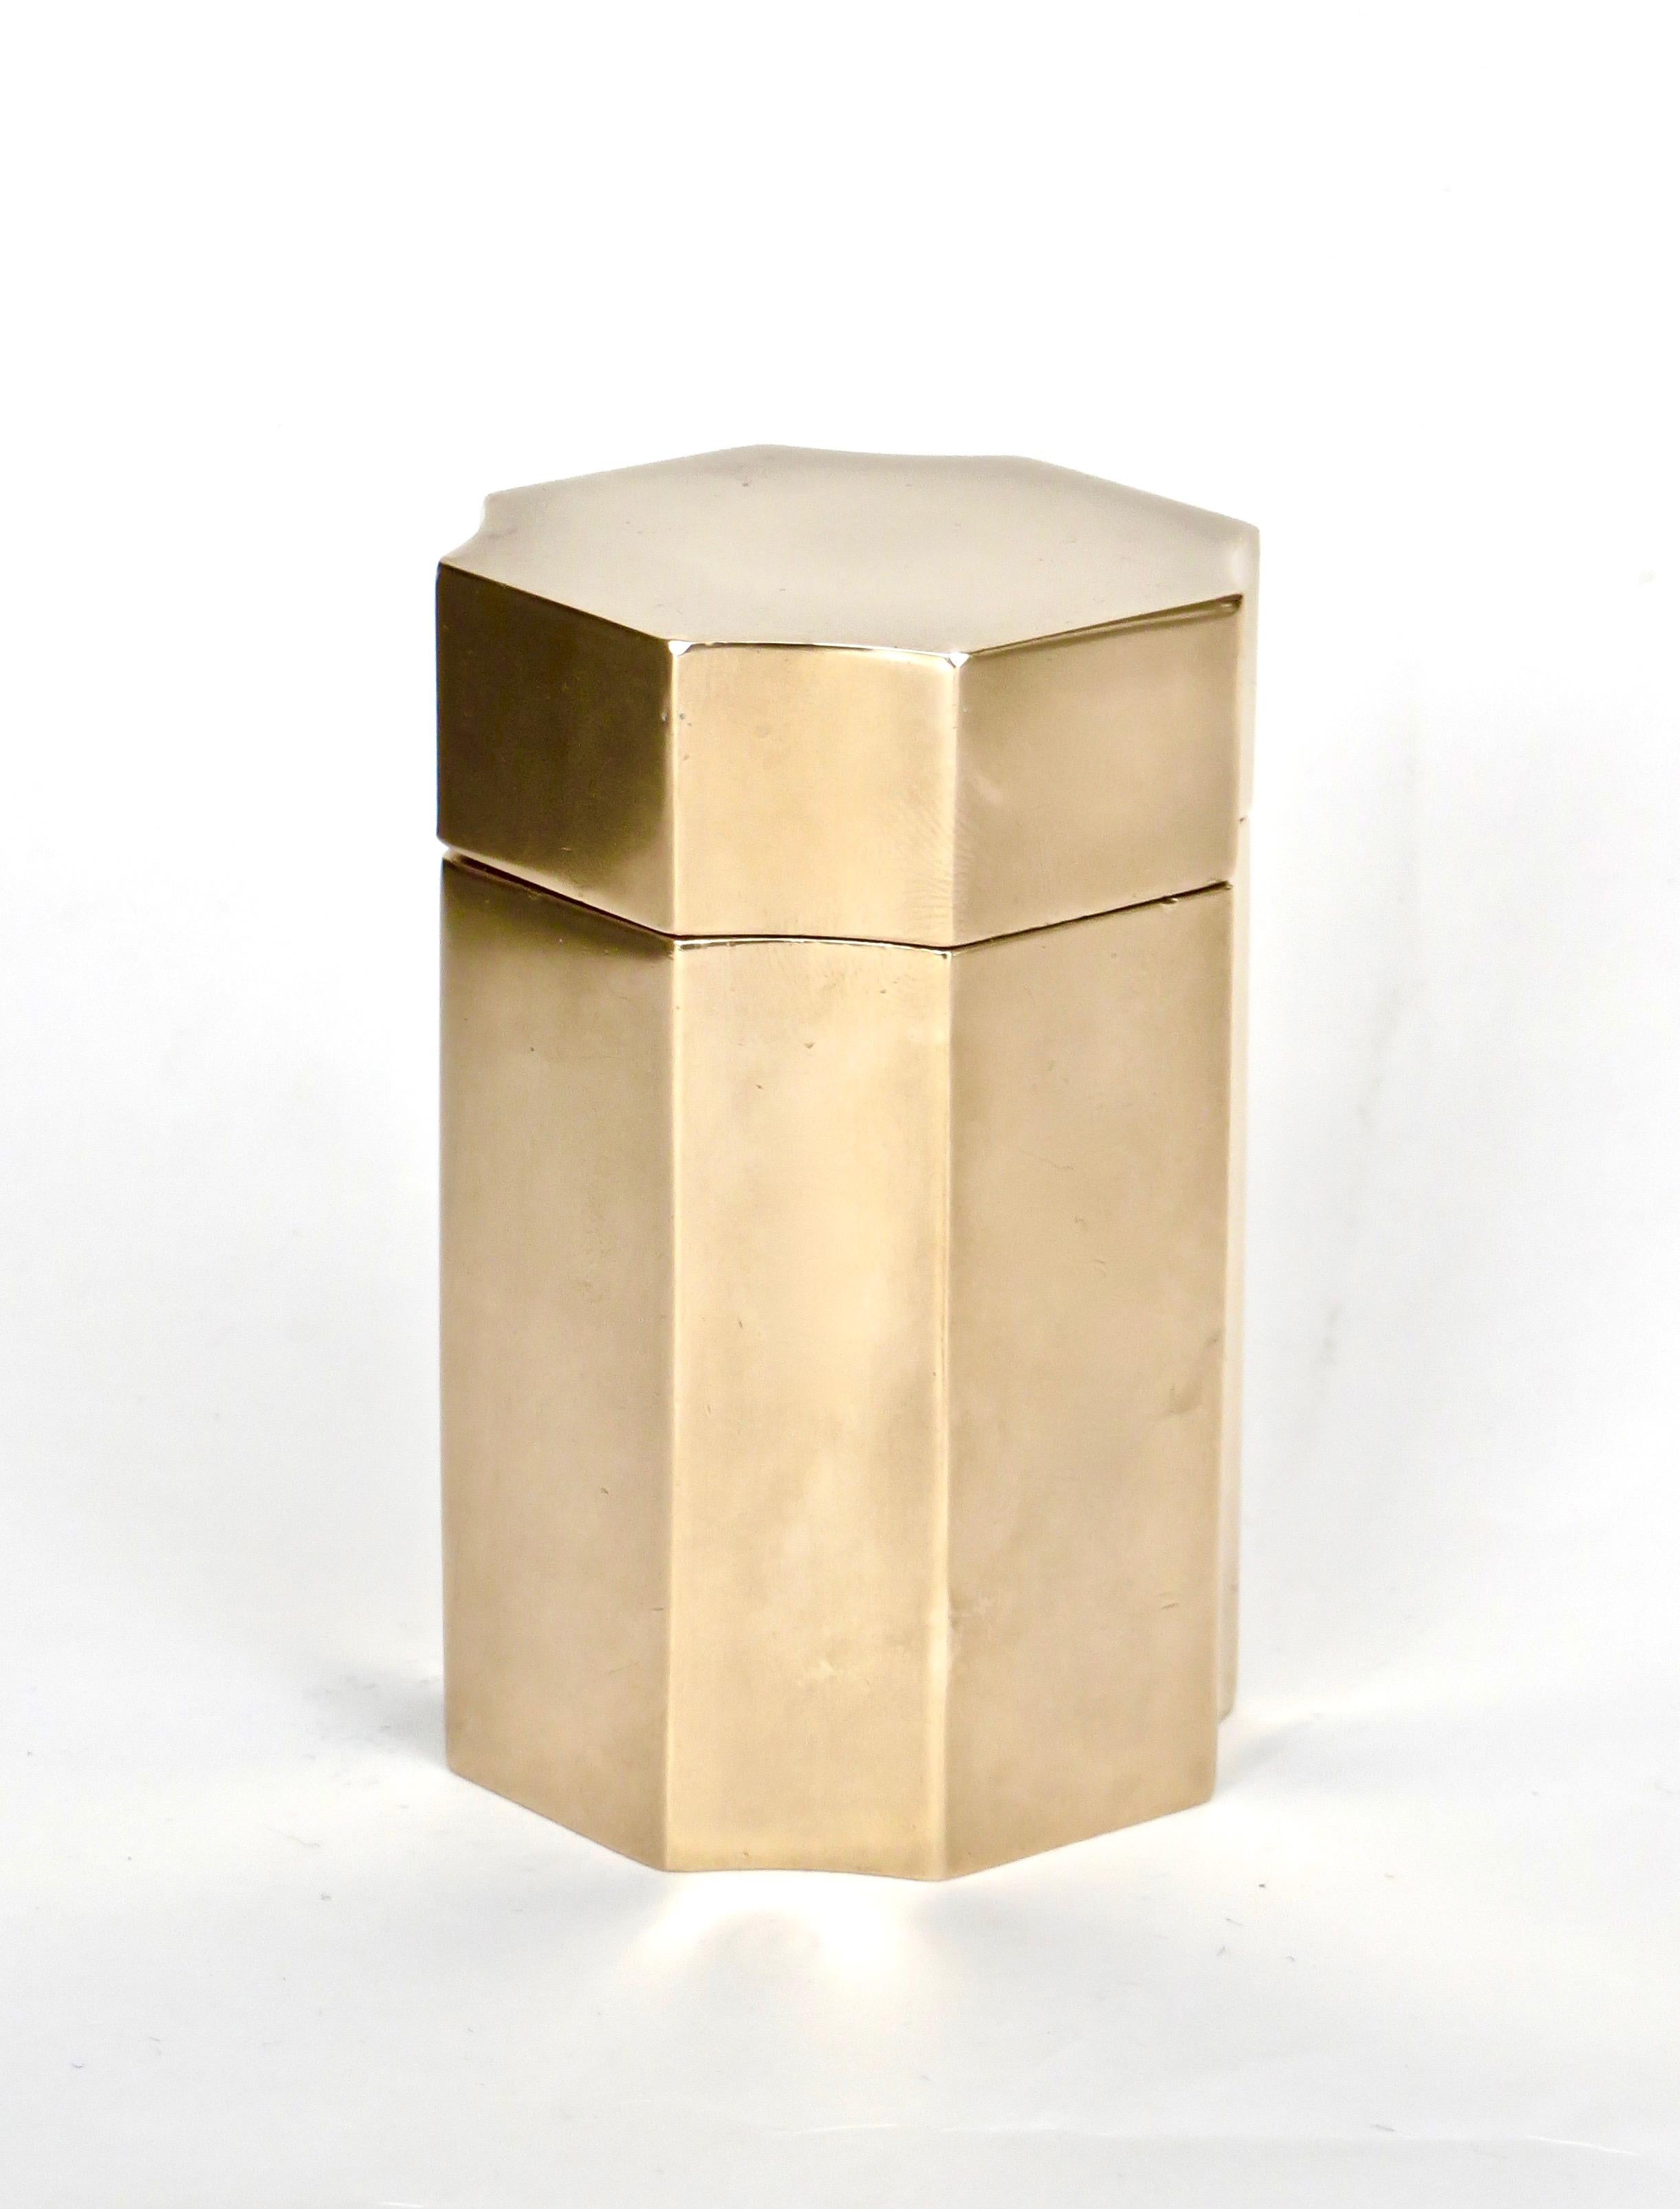 Mid-Century Modern Monique Gerber Bronze Box La Ligne Suedoise Edition by Sigward Bernadotte